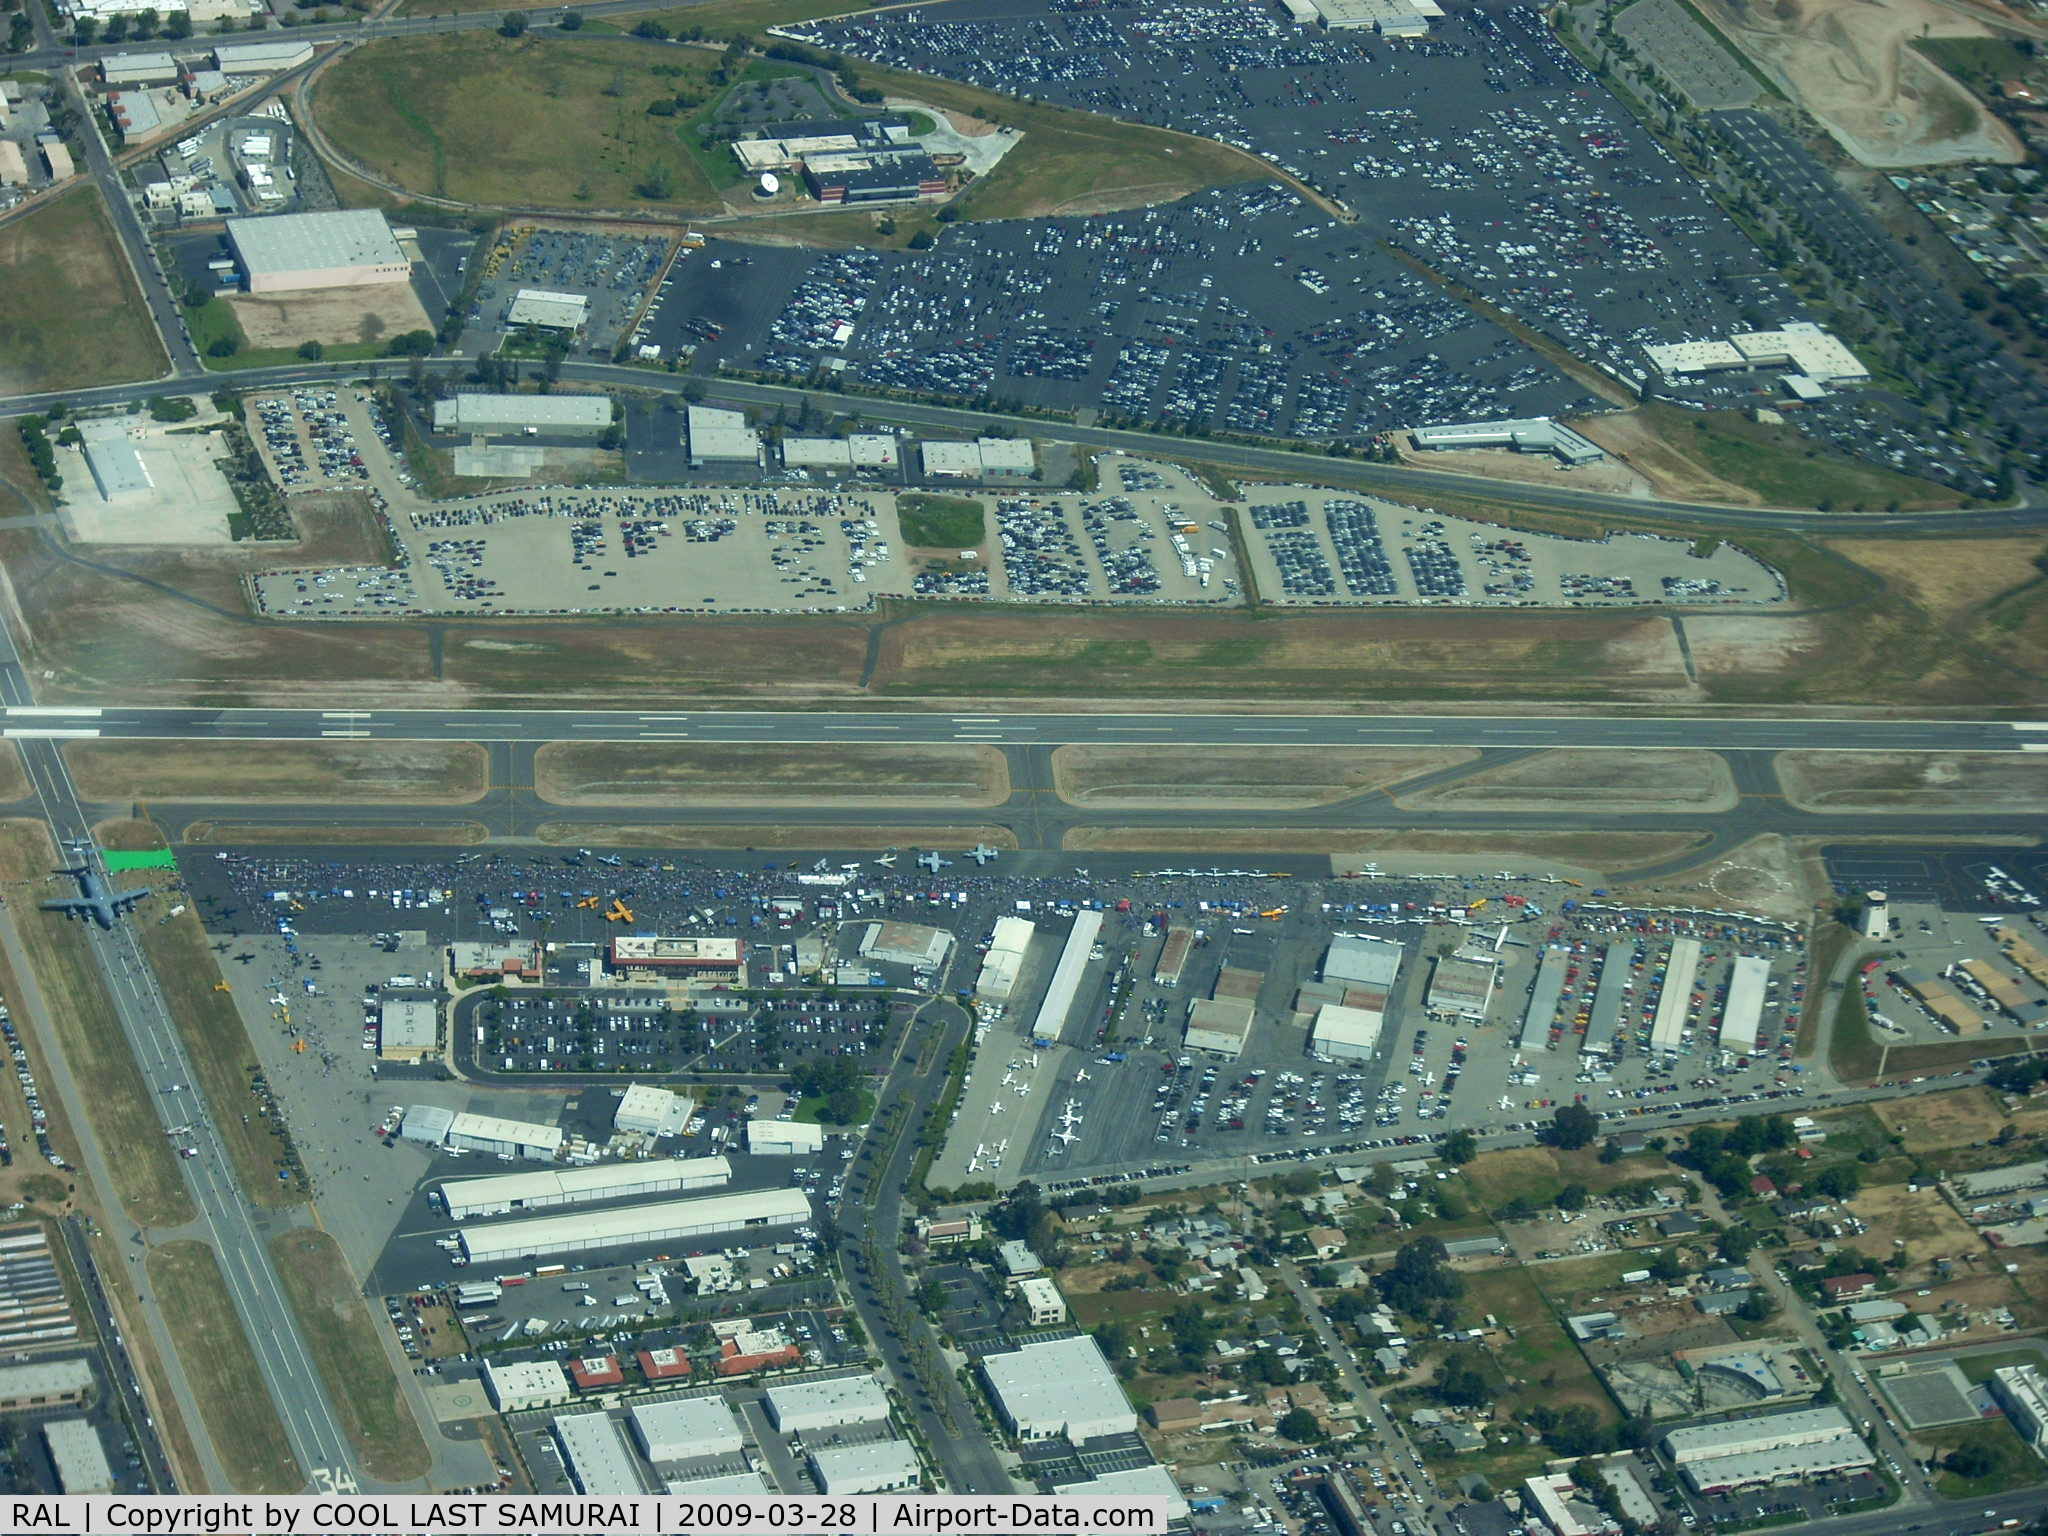 Riverside Municipal Airport (RAL) - Aerial view of Riverside Airshow